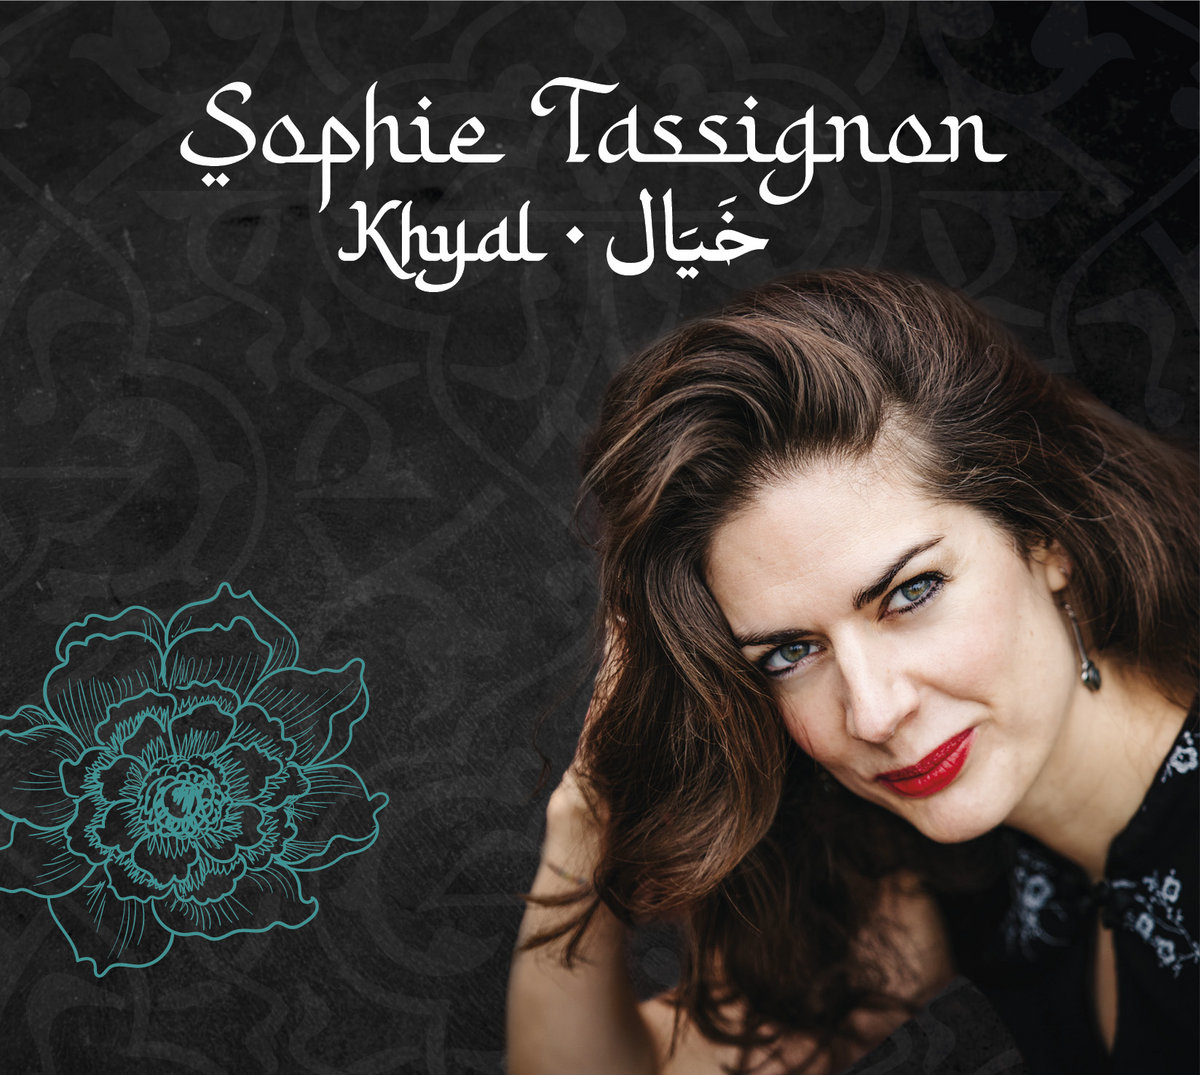 Sophie Tassignon Khyal